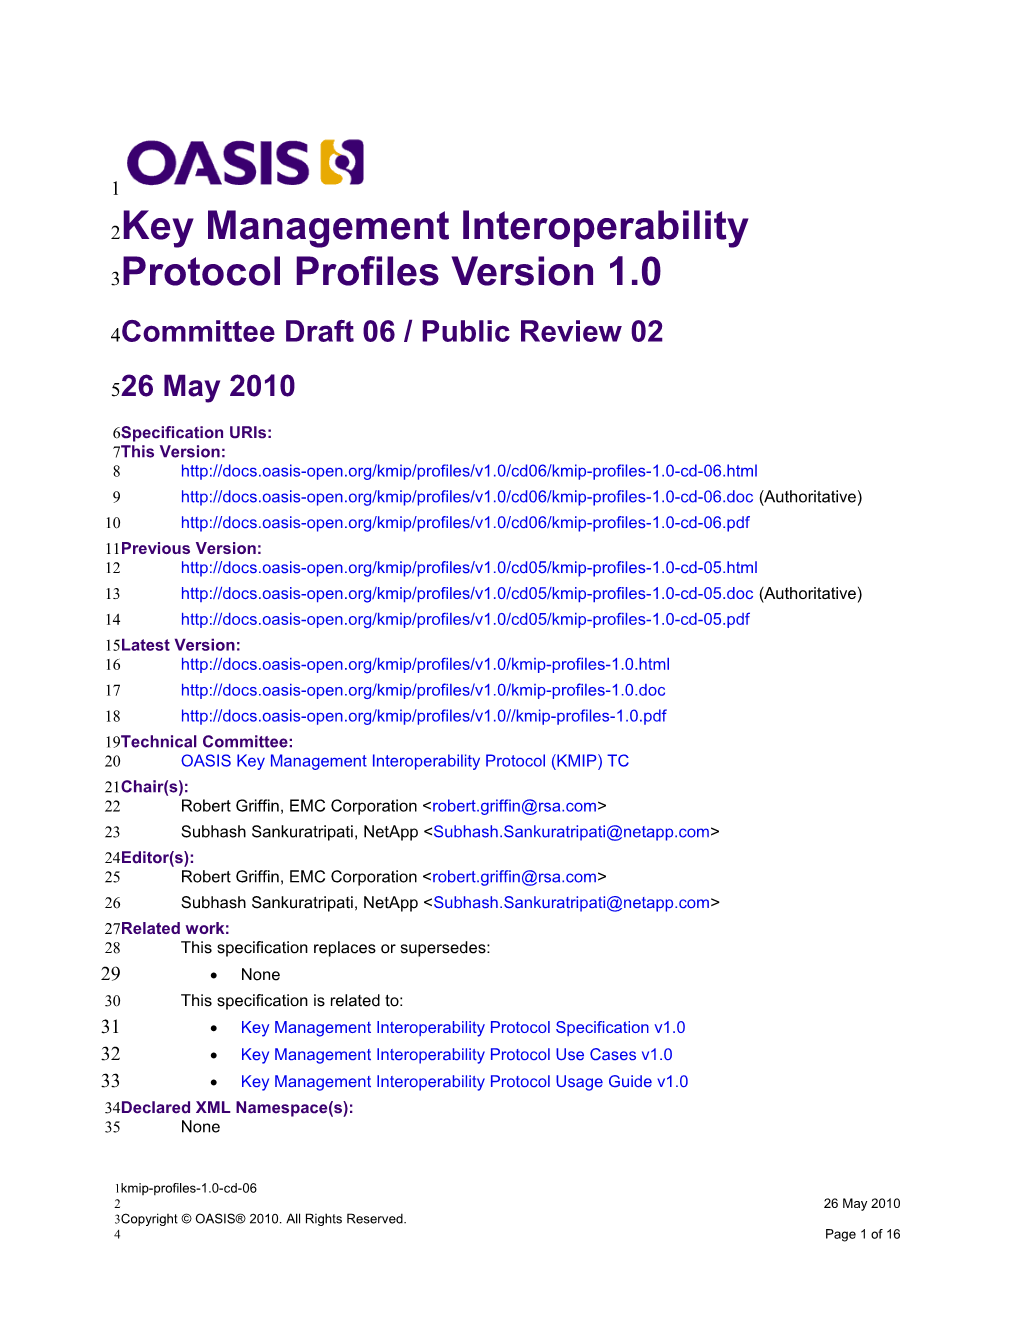 Key Management Interoperability Protocol s1